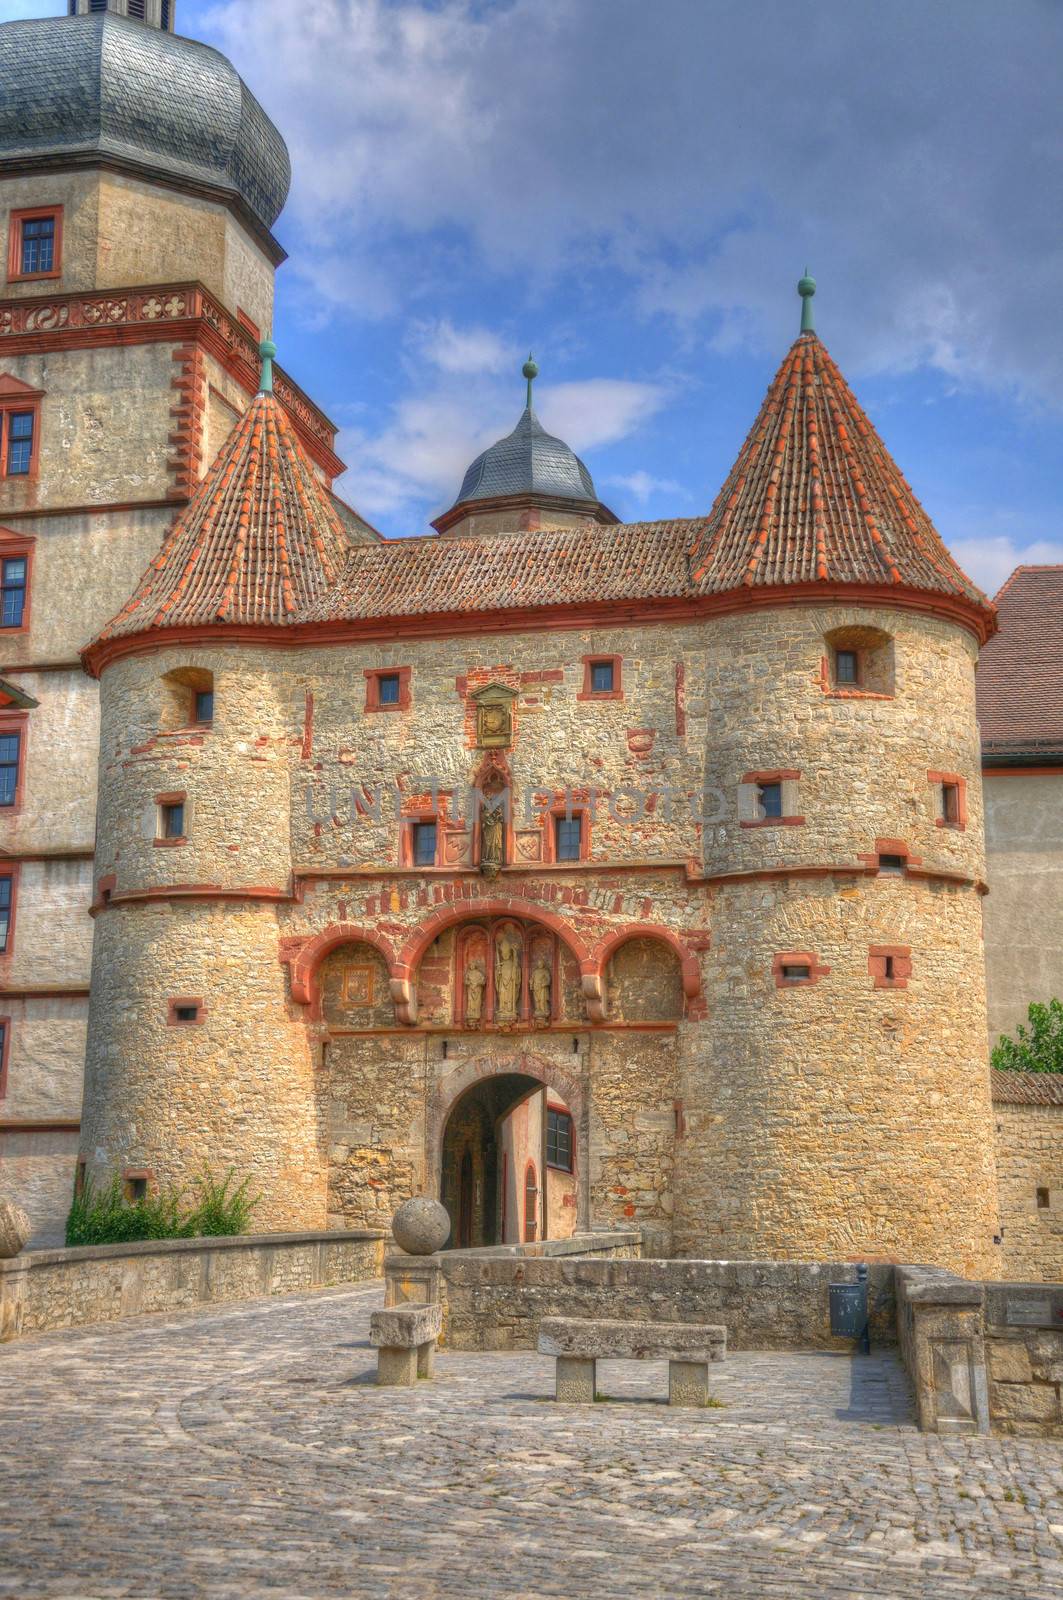 Scherenbergtor in Marienberg Fortress (Castle), Wurzburg, Bayern by Eagle2308